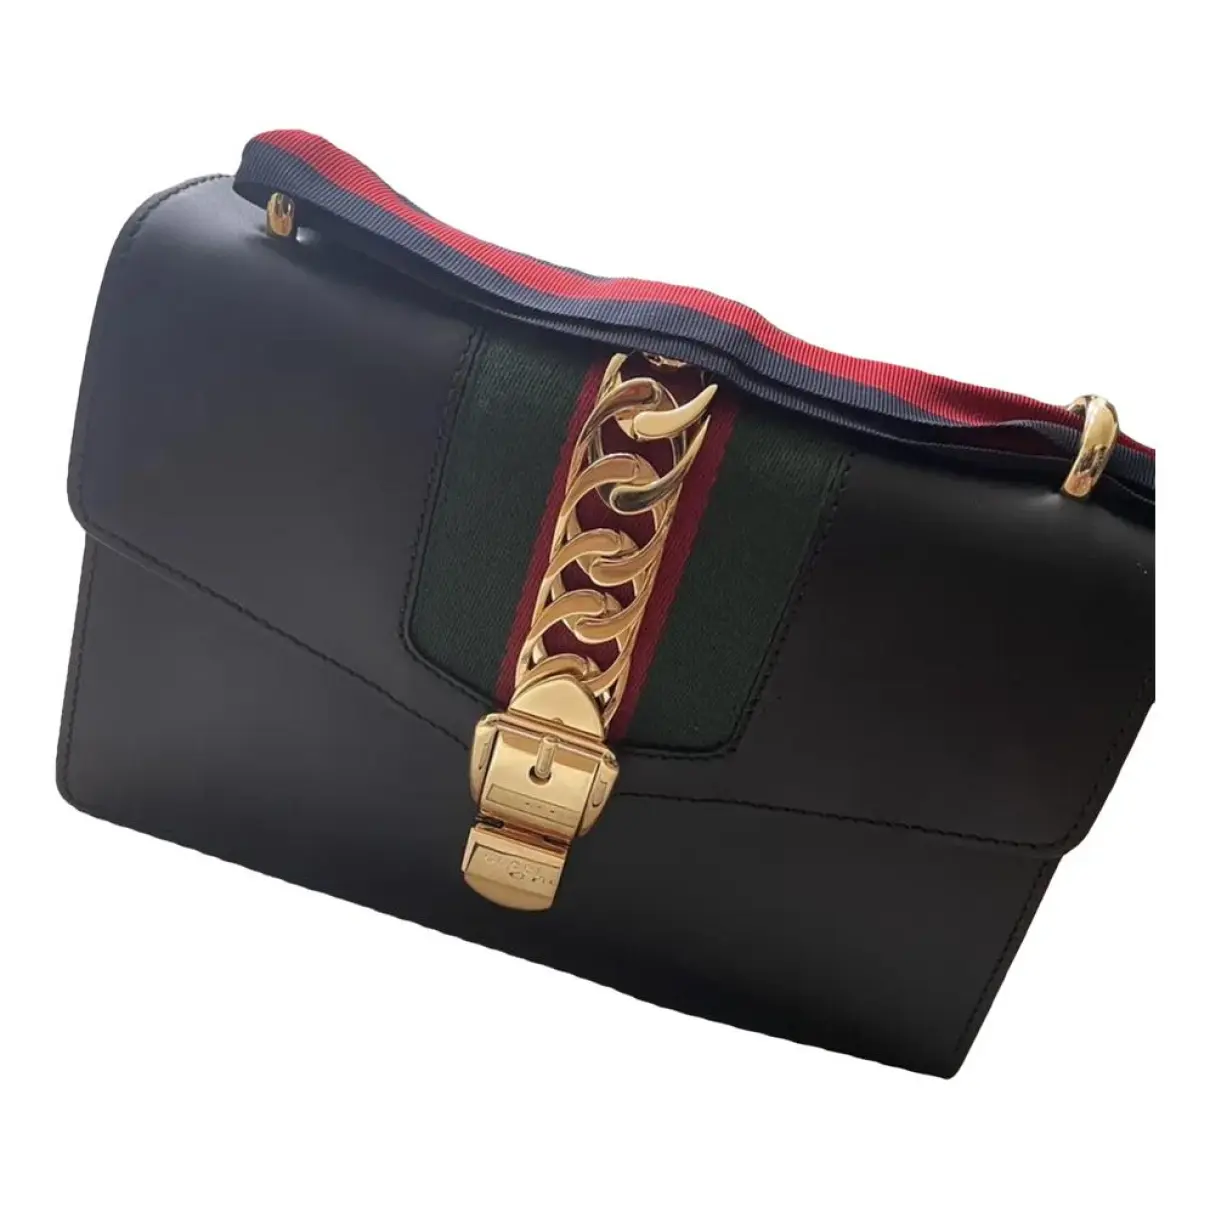 Sylvie leather handbag